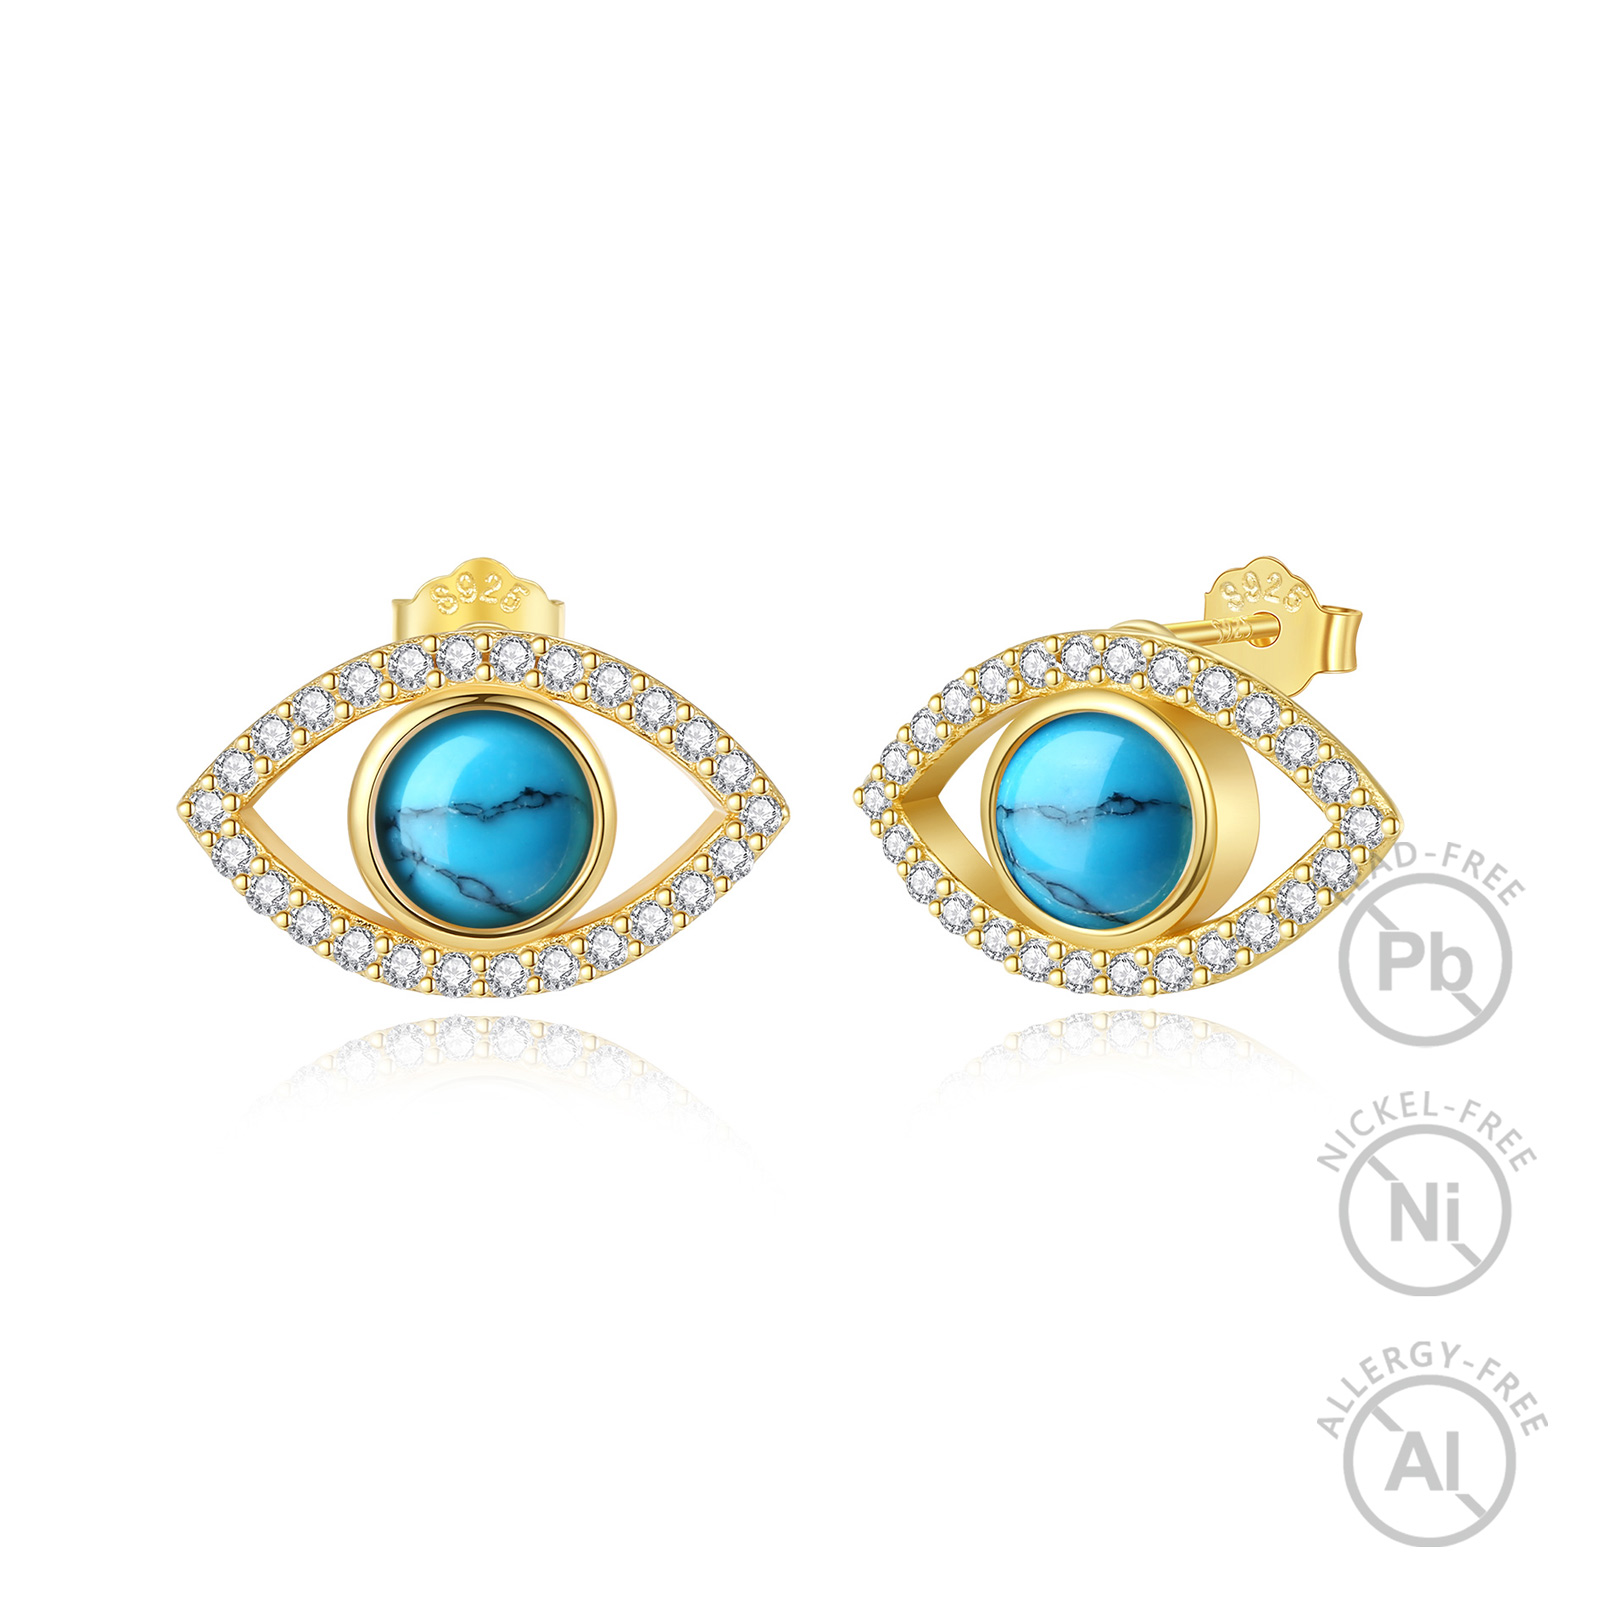 Merryshine Jewelry Turquoise 925 Sterling Silver 18K Gold Plated Devil Eye Element Shaped Stud Earrings for Women